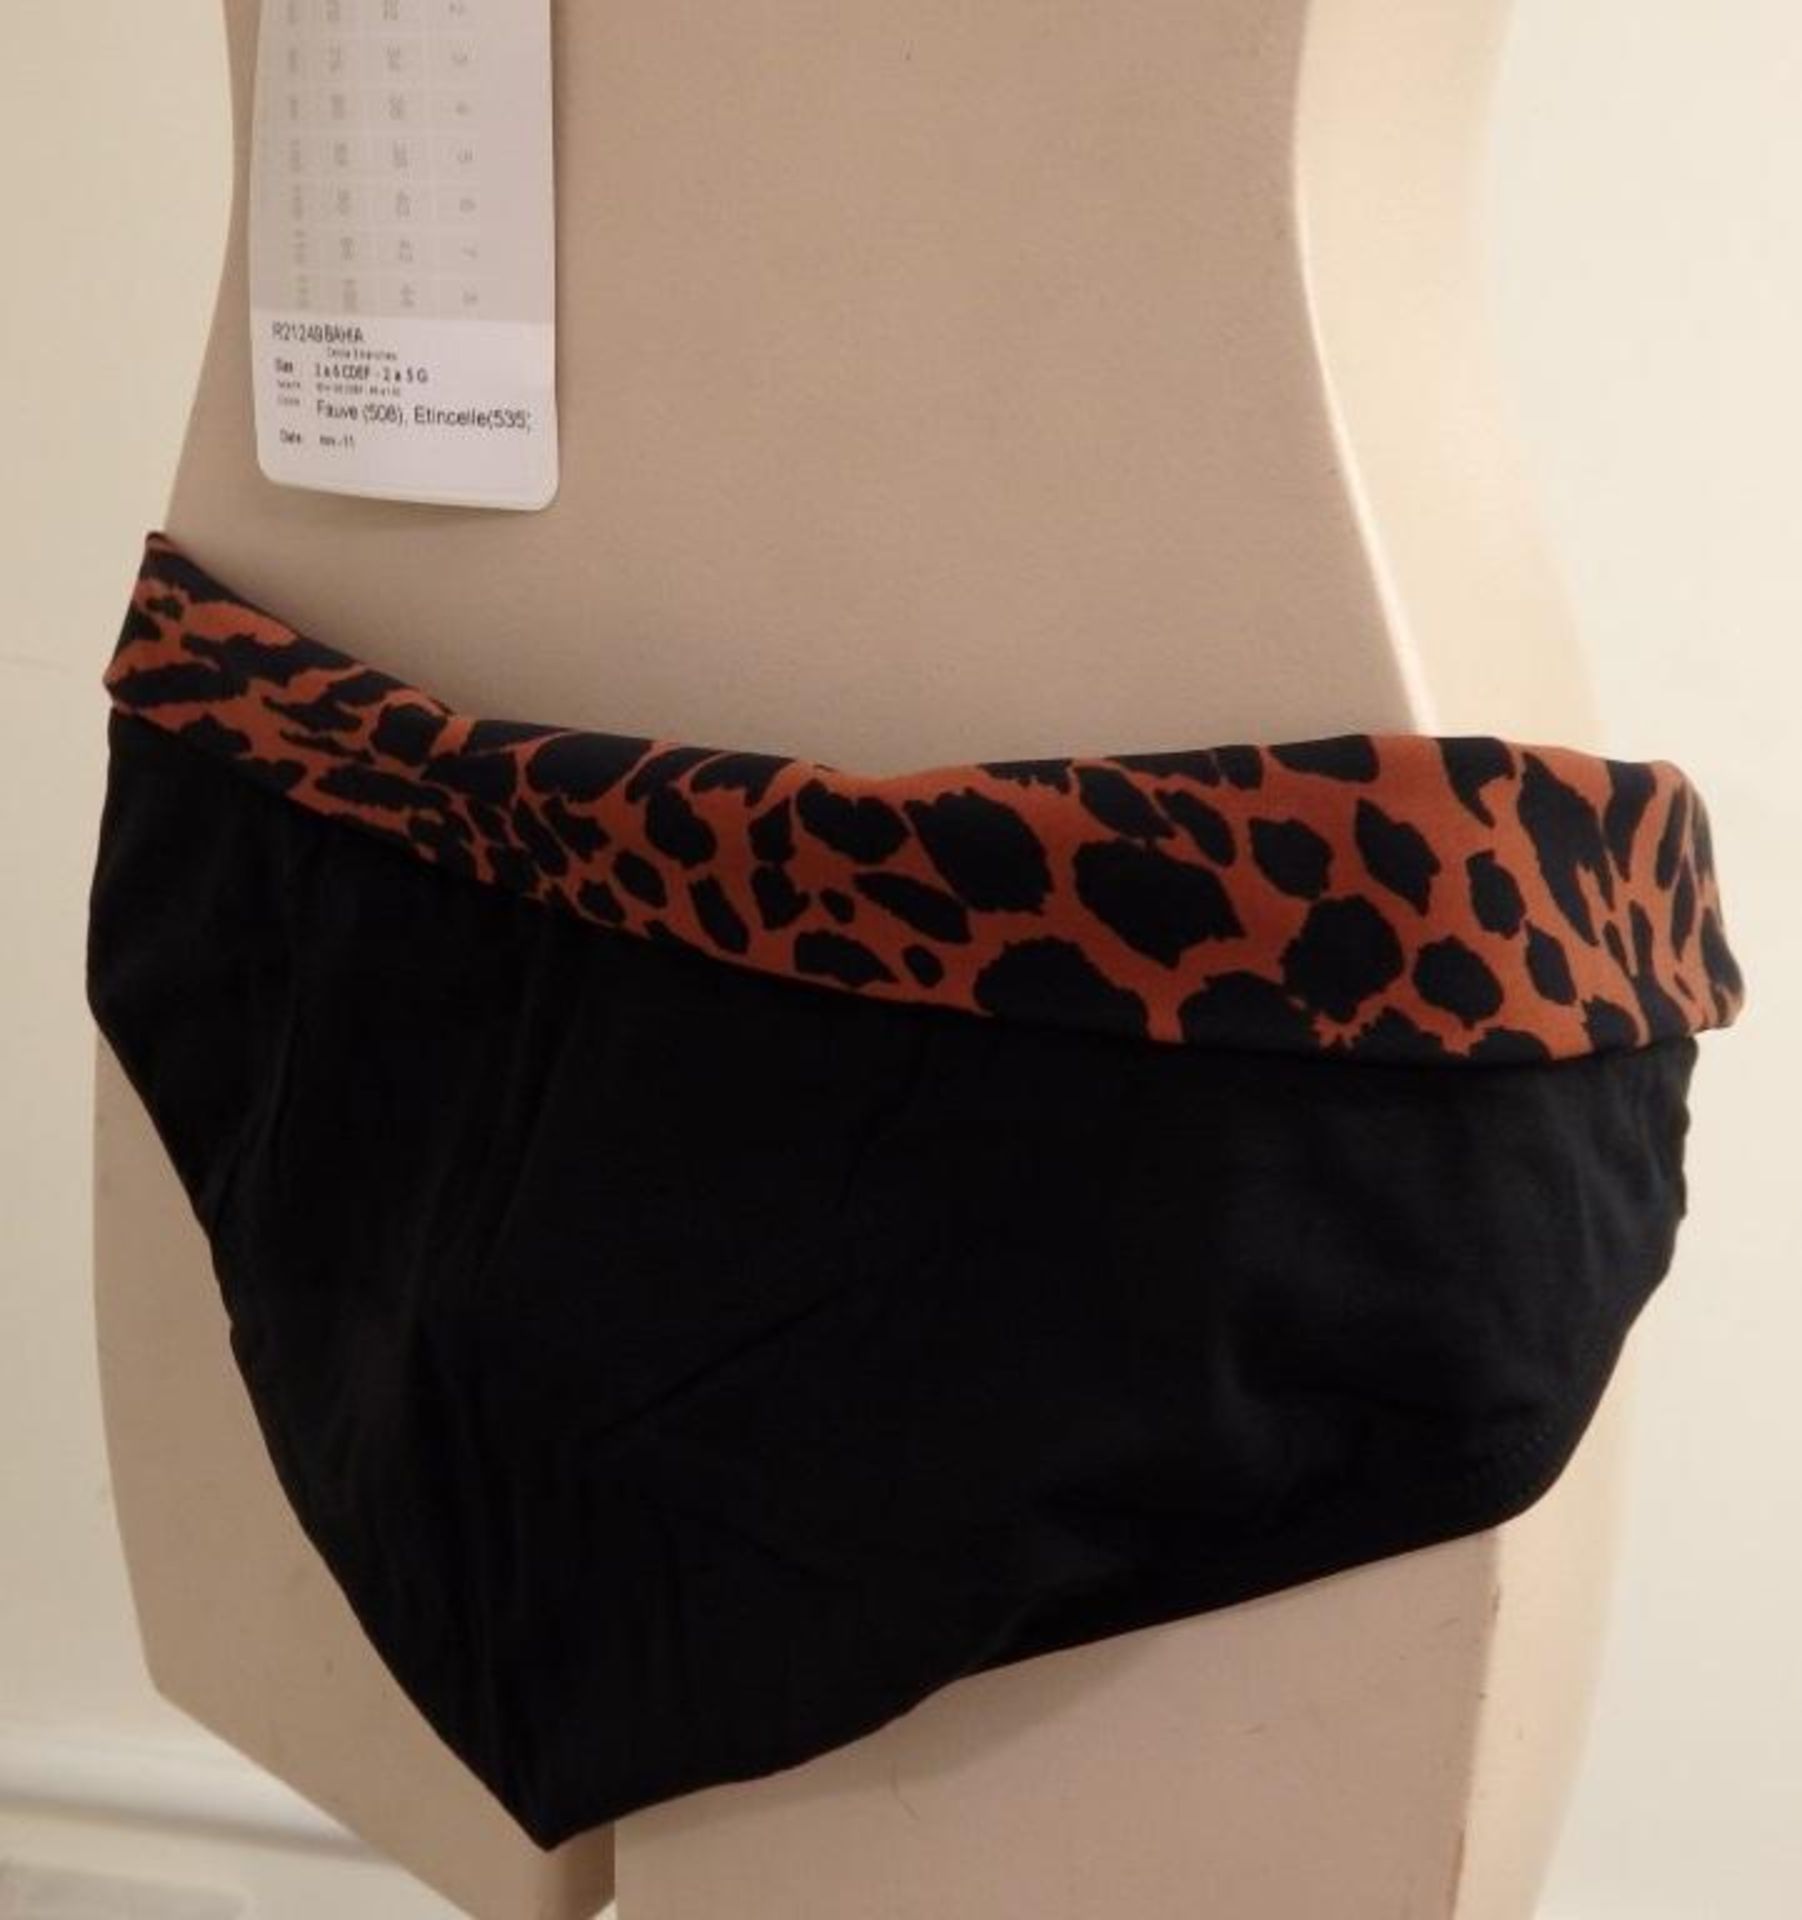 1 x Rasurel - Black/Tan Leopard and Stripe -Bahia Bikini - R21249 - Size 2C - UK 32 - Fr 85 - EU/Int - Image 8 of 9